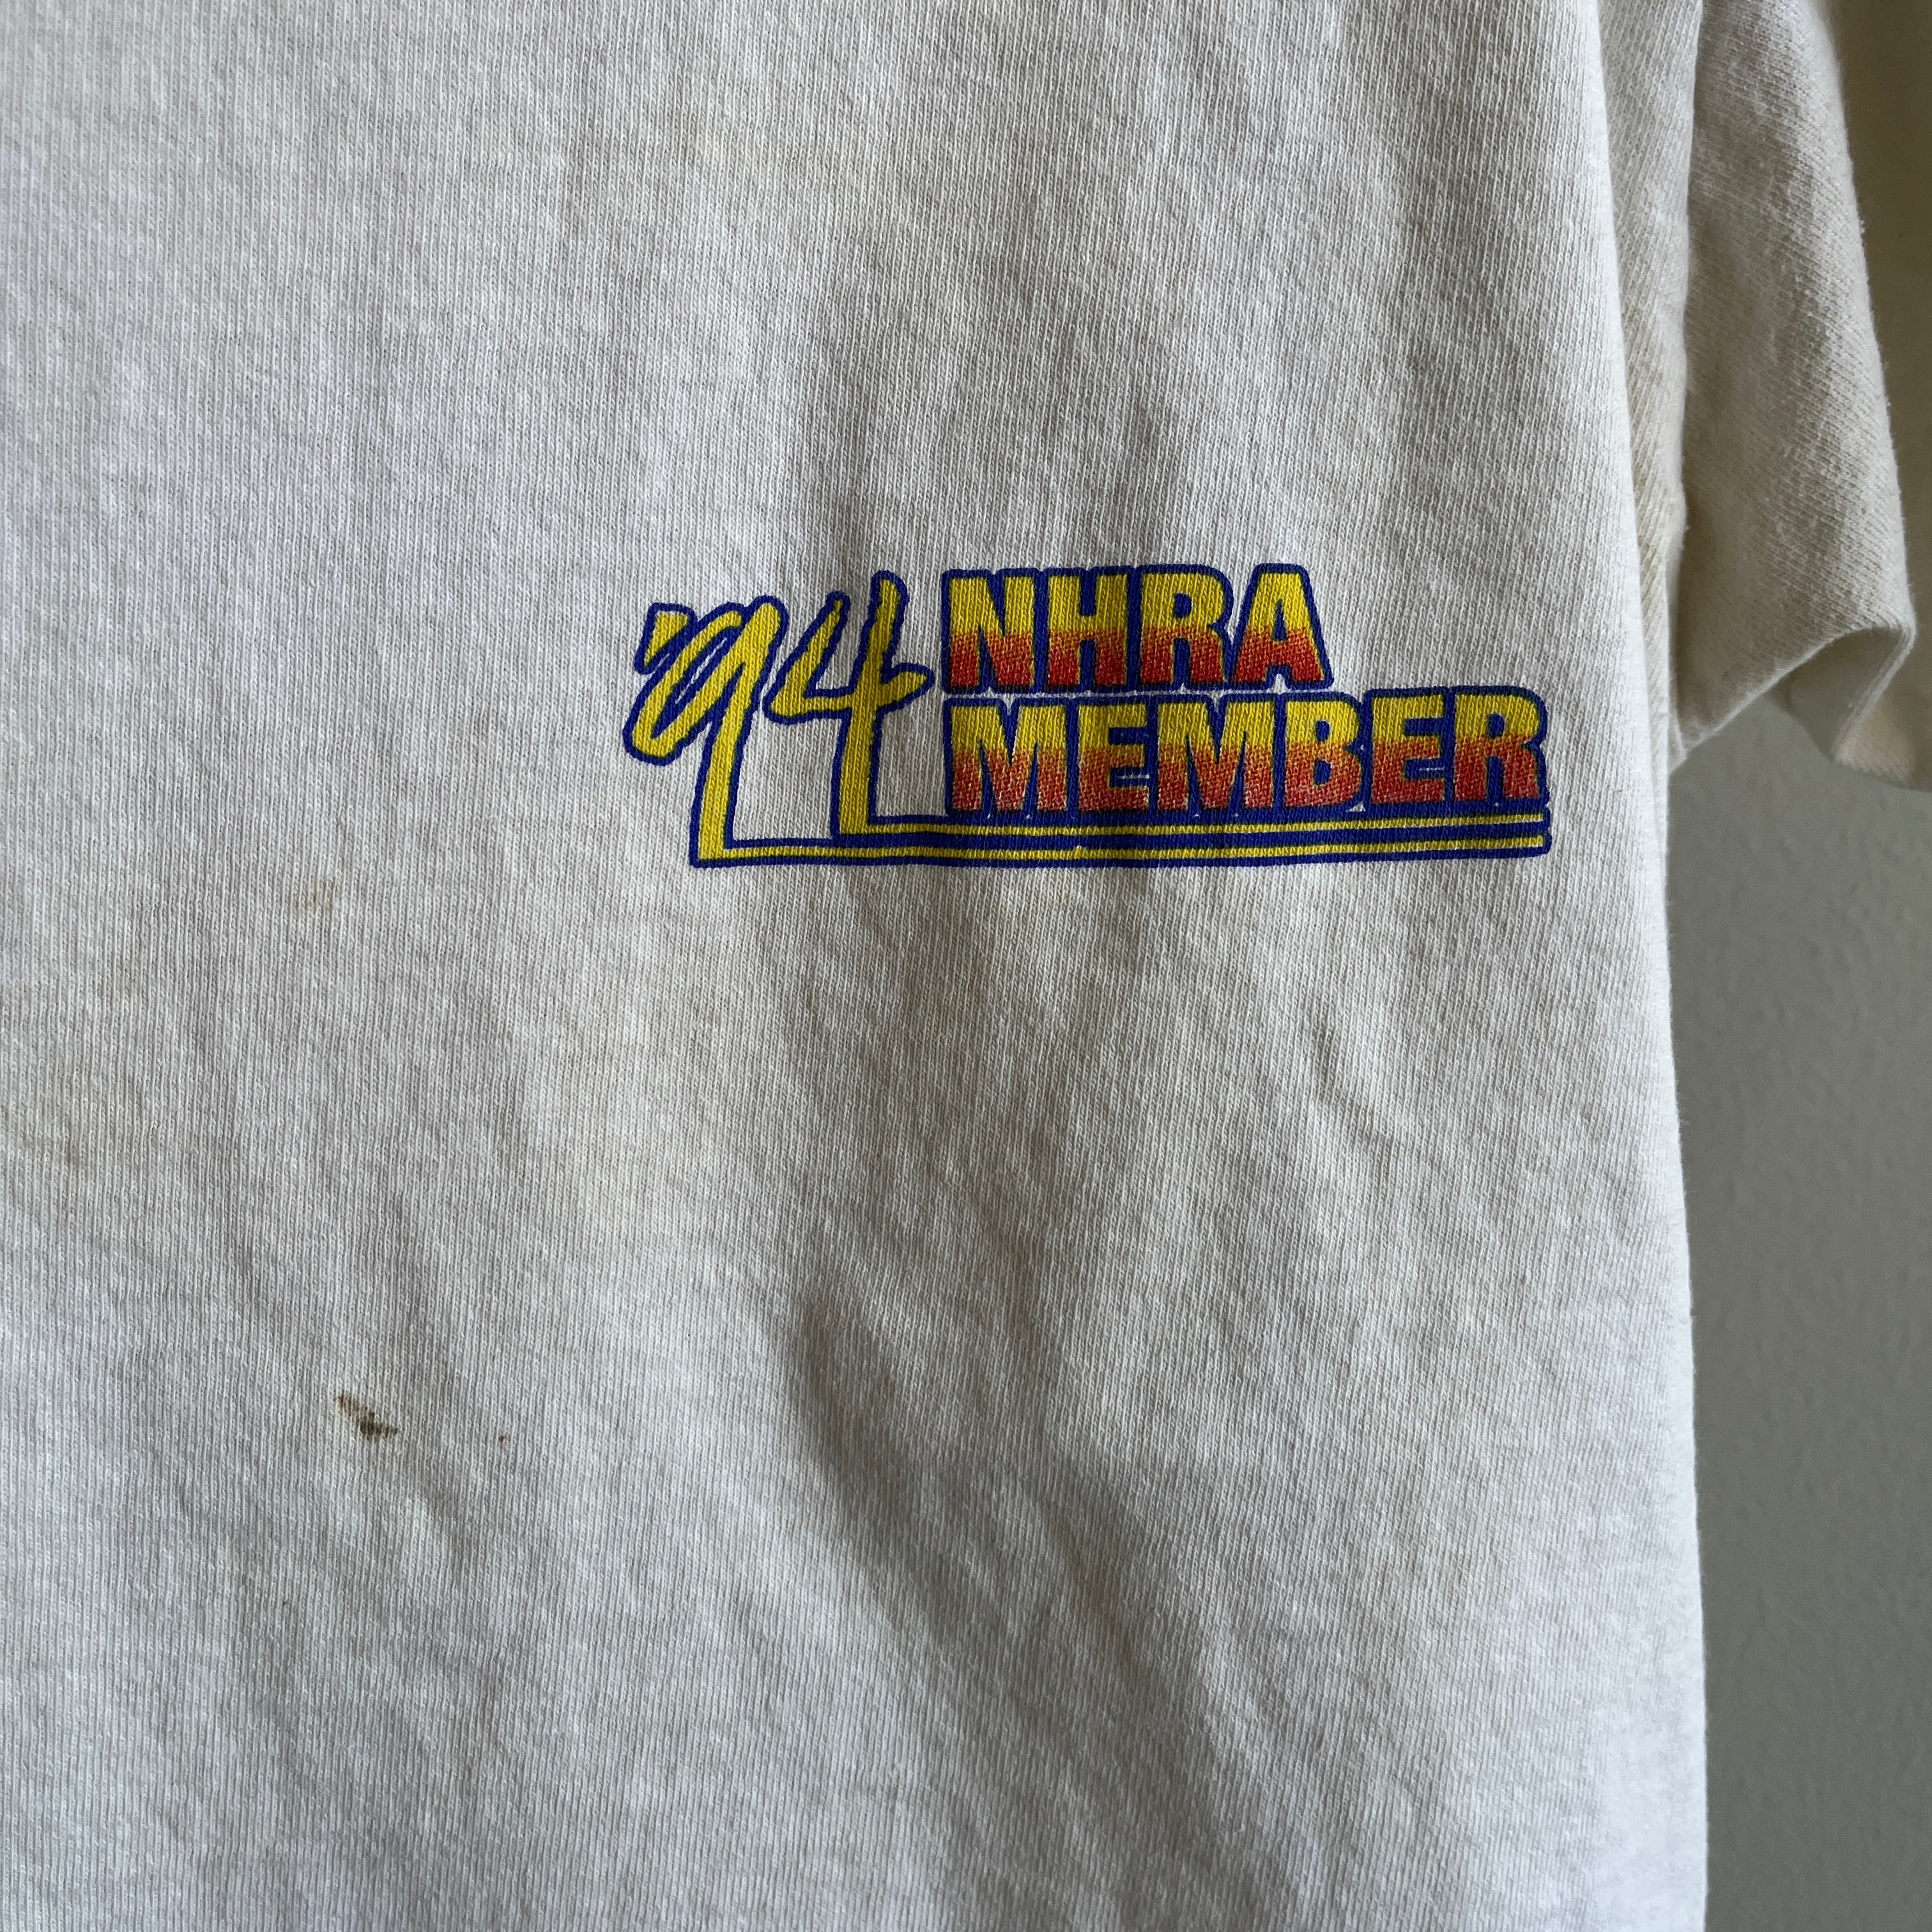 1994 National Hotrod Association Backside T-shirt - Aged with Higher Crew